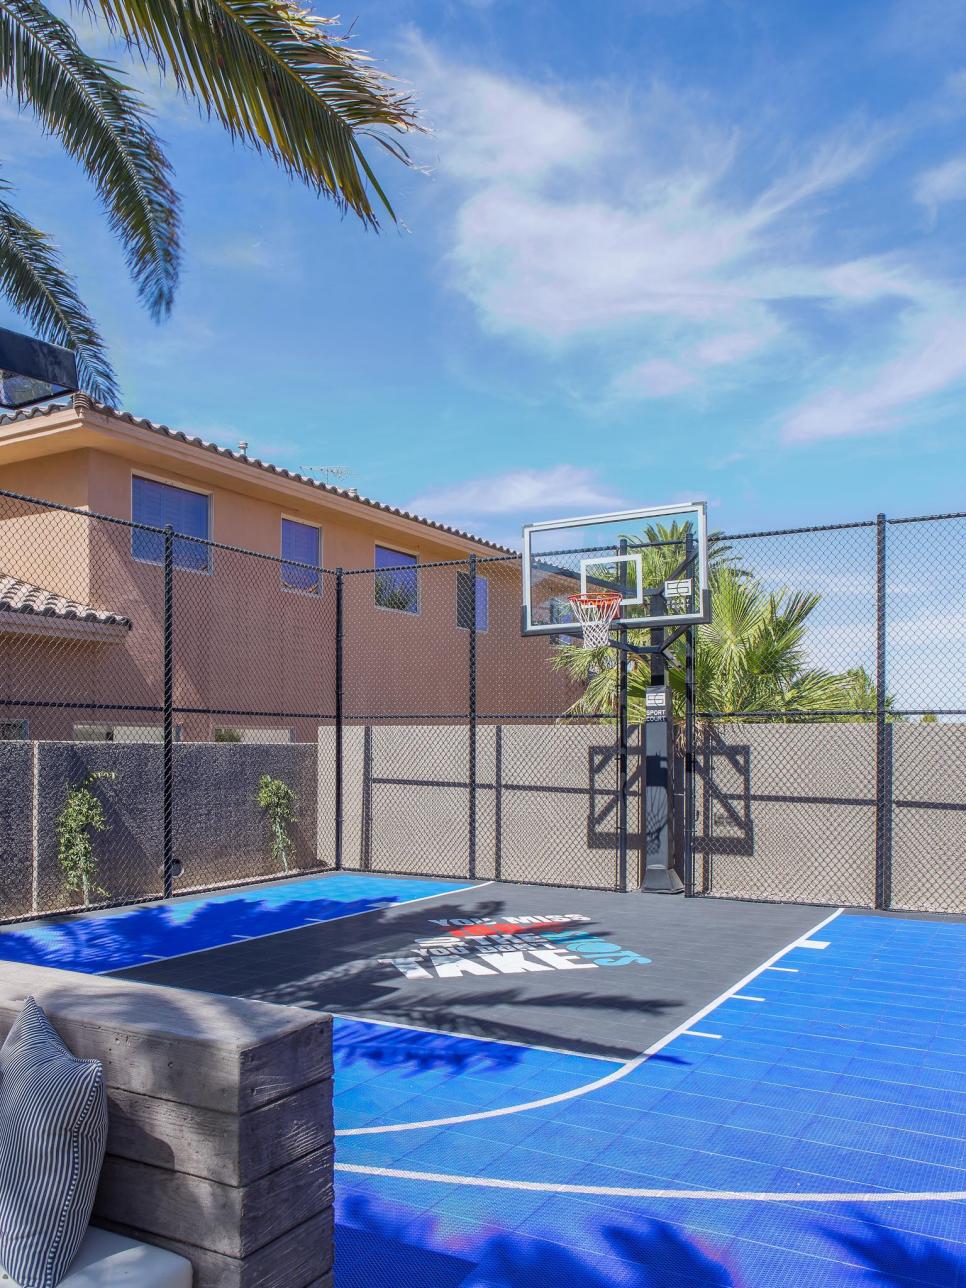 Backyard Basketball Court | HGTV